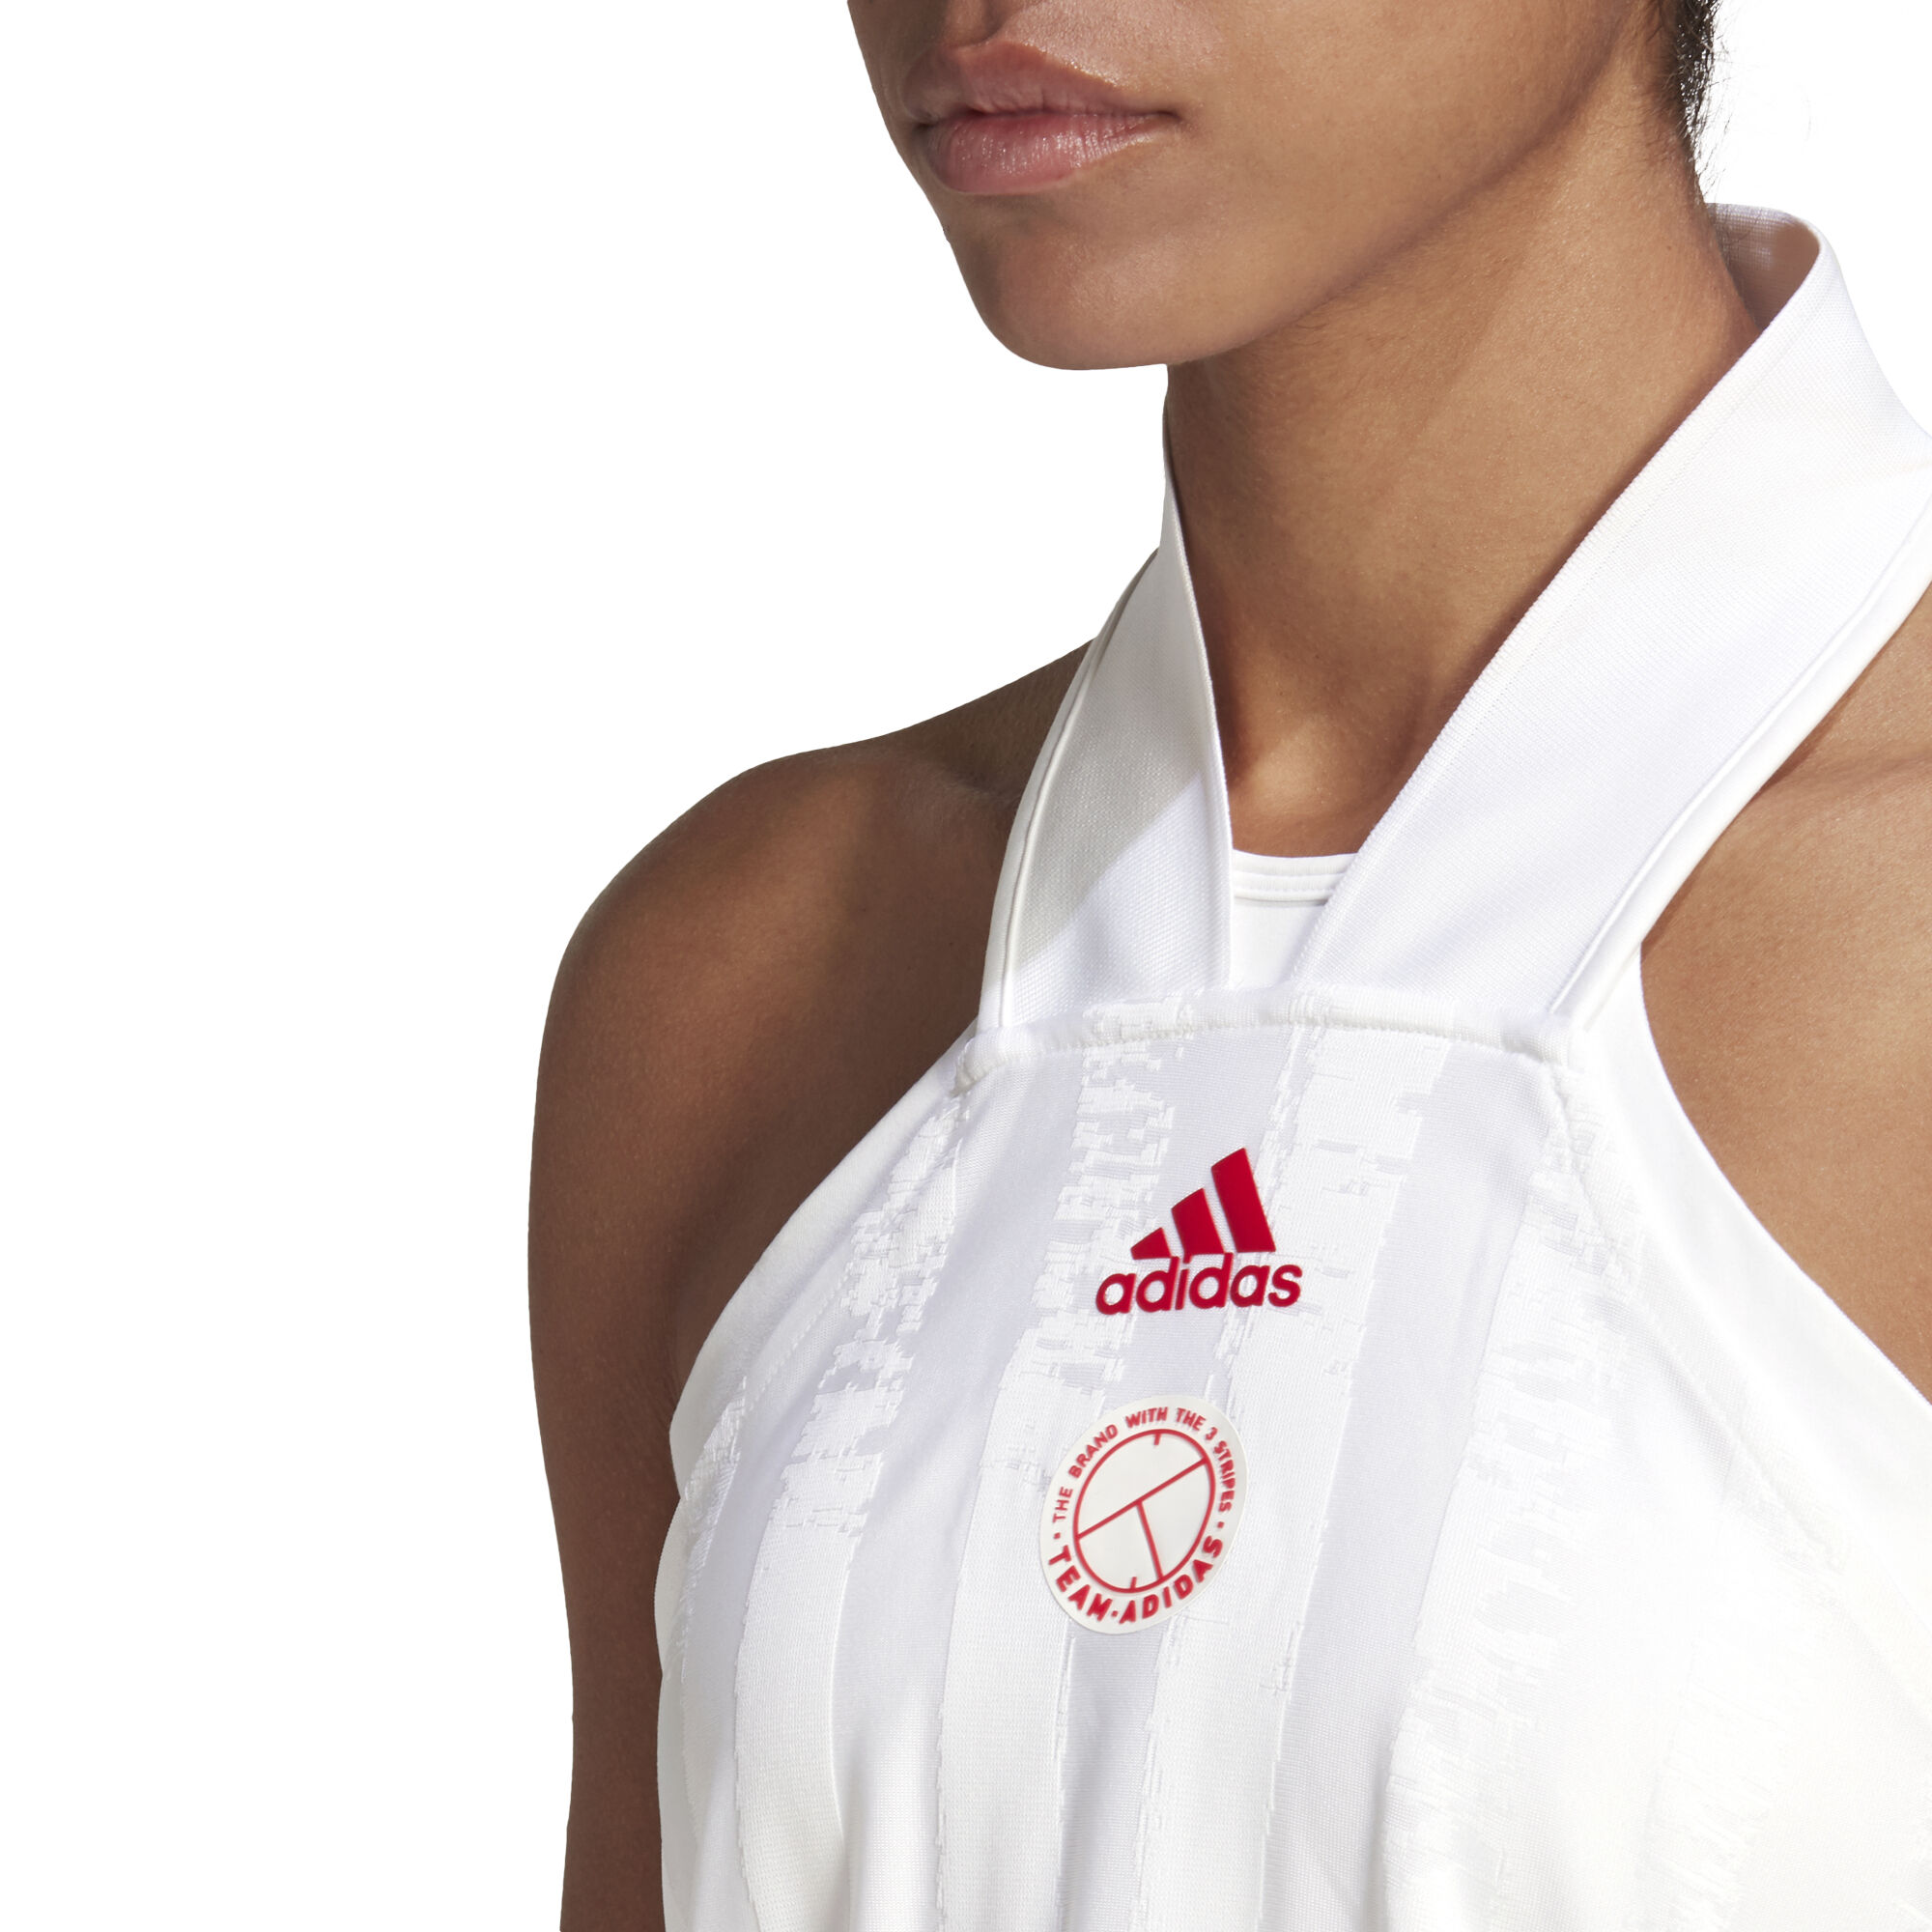 adidas All-in-One Vestido Blanco compra online | Tennis-Point